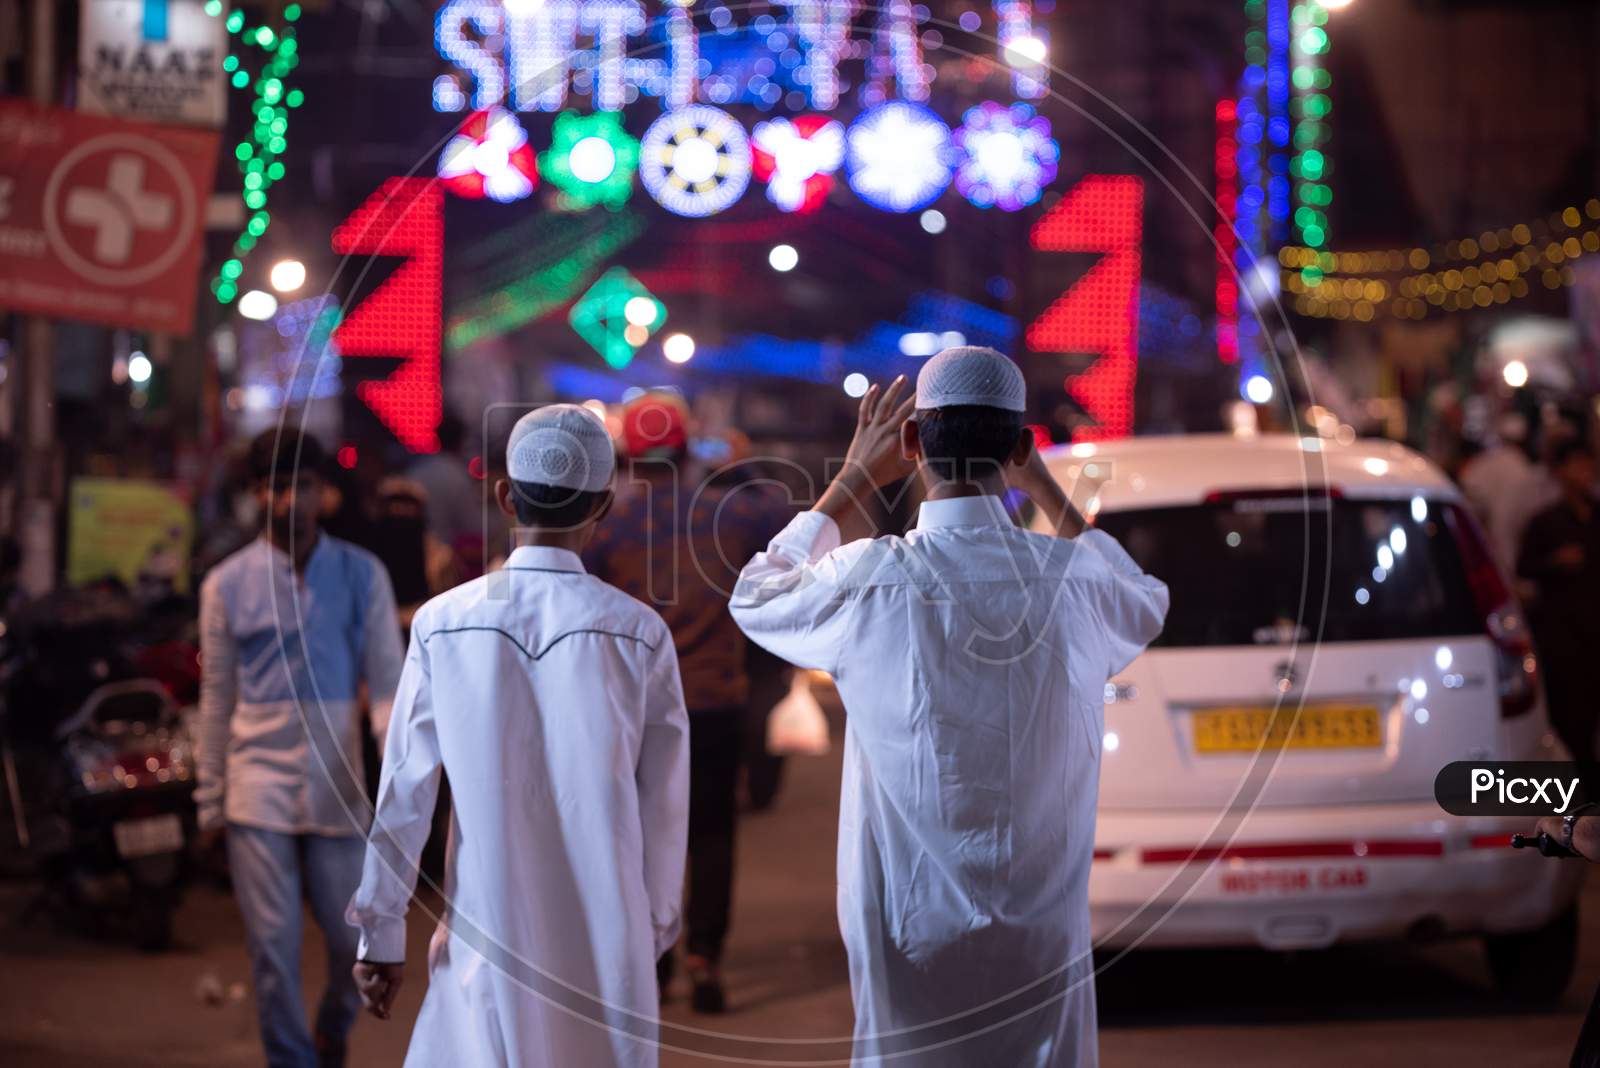 A Muslim Boy Wearing A Namaz Cap And Waling On a Street